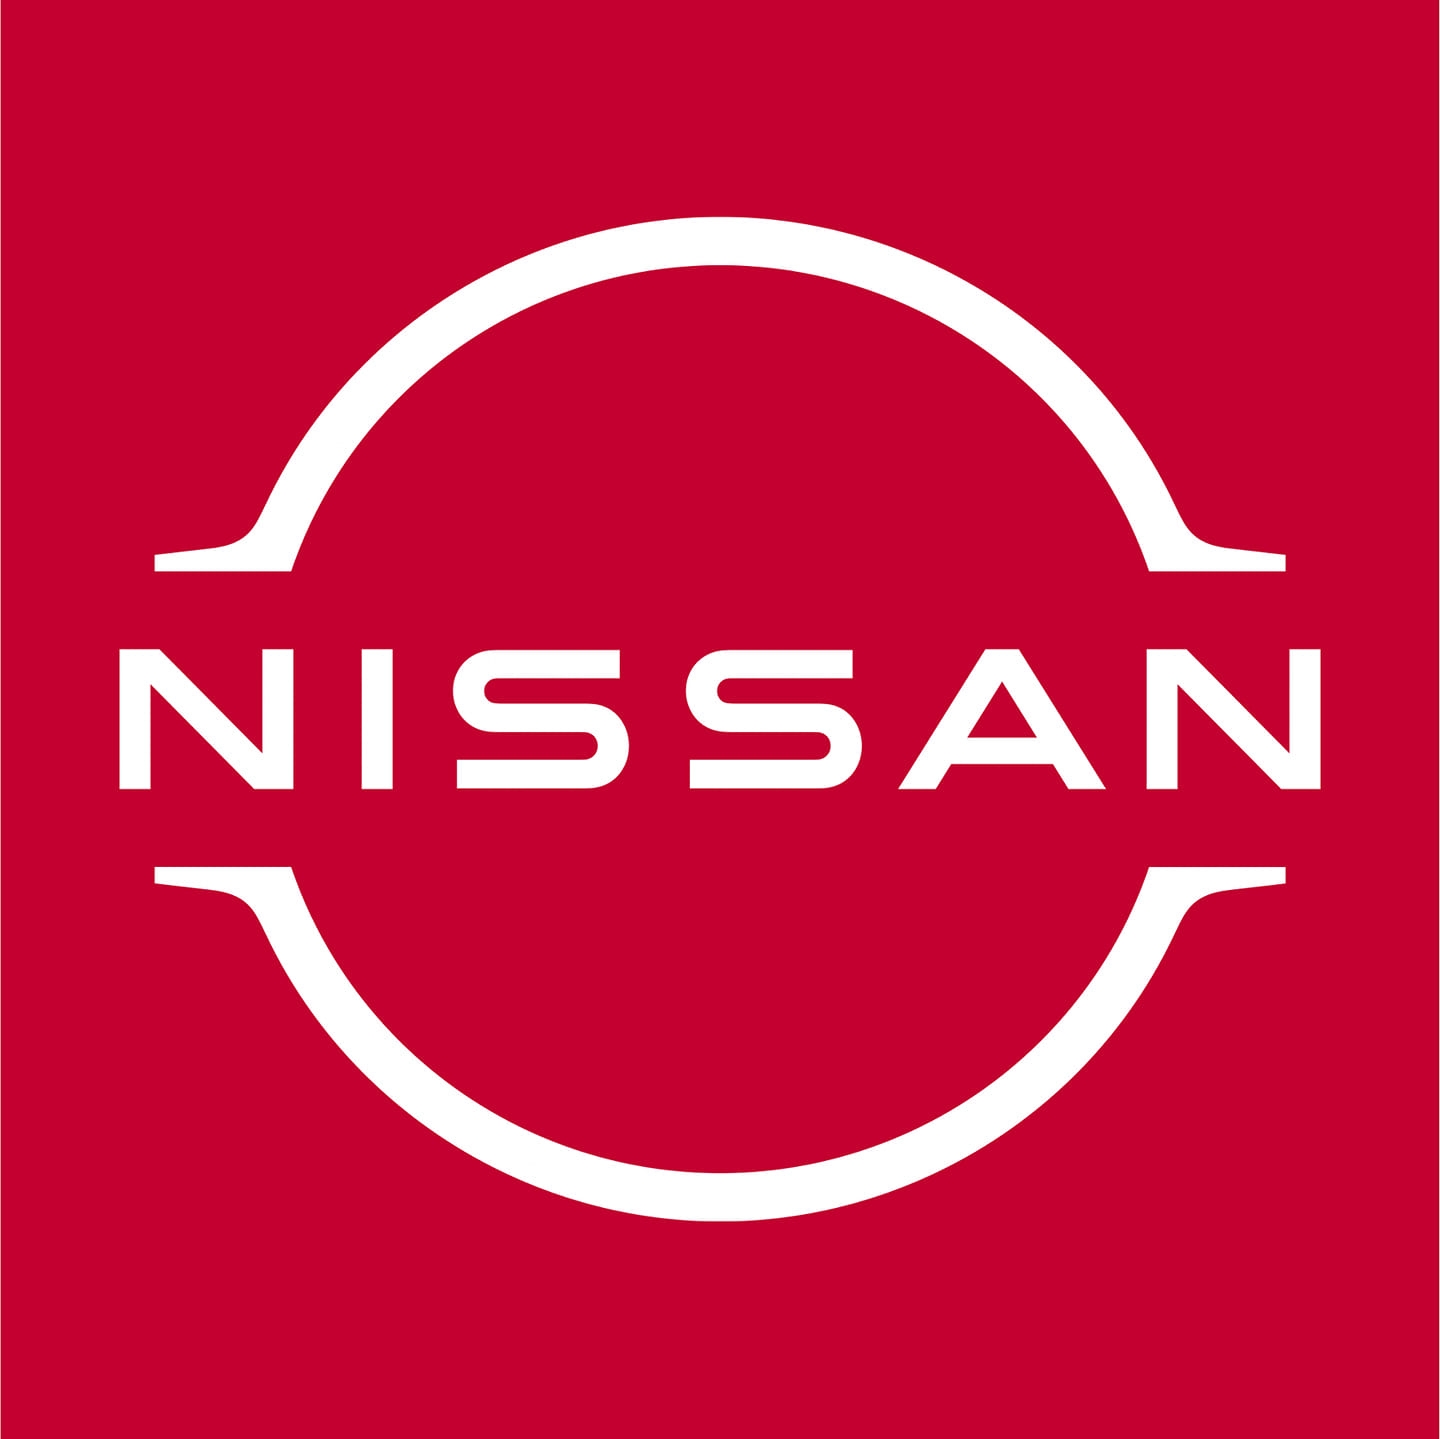 RAFAEL NISSAN - Logo